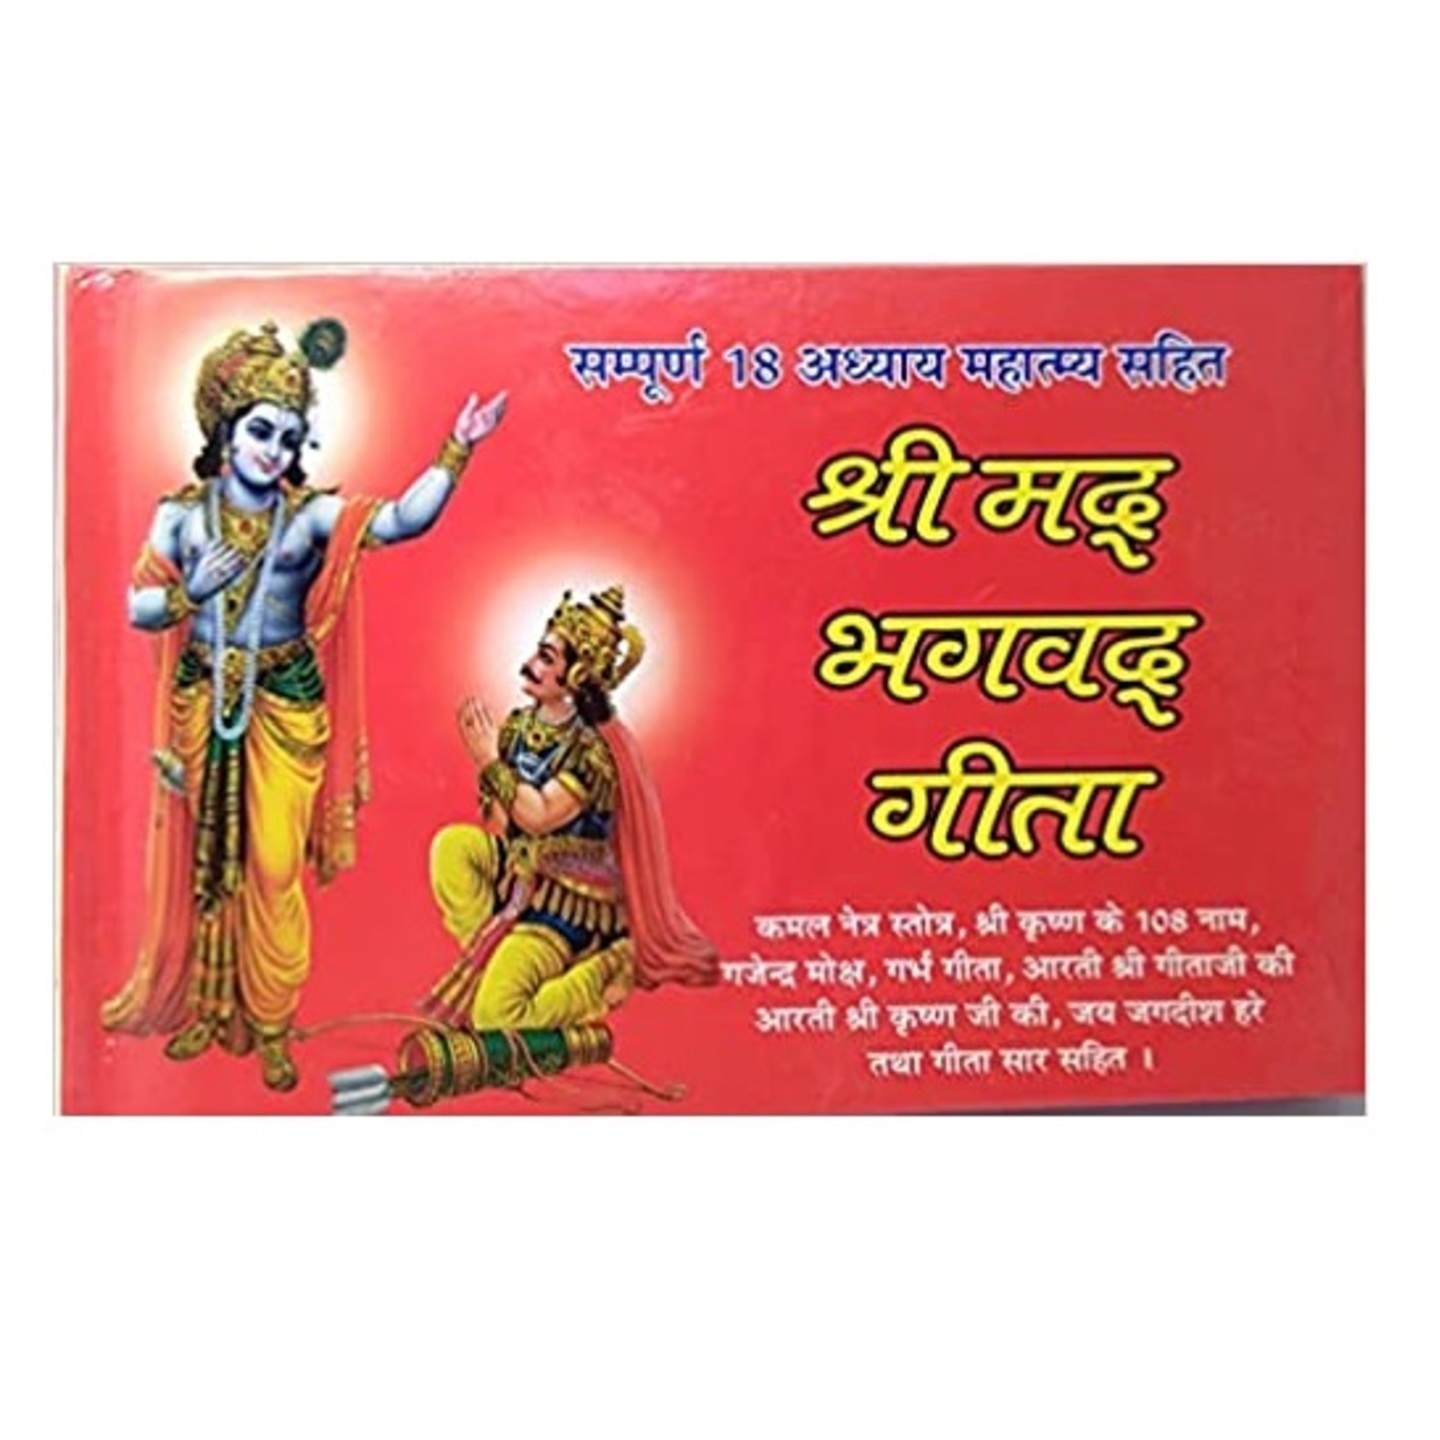 Shrimad Bhagvat Geeta Book in Hindi (Hardcover)